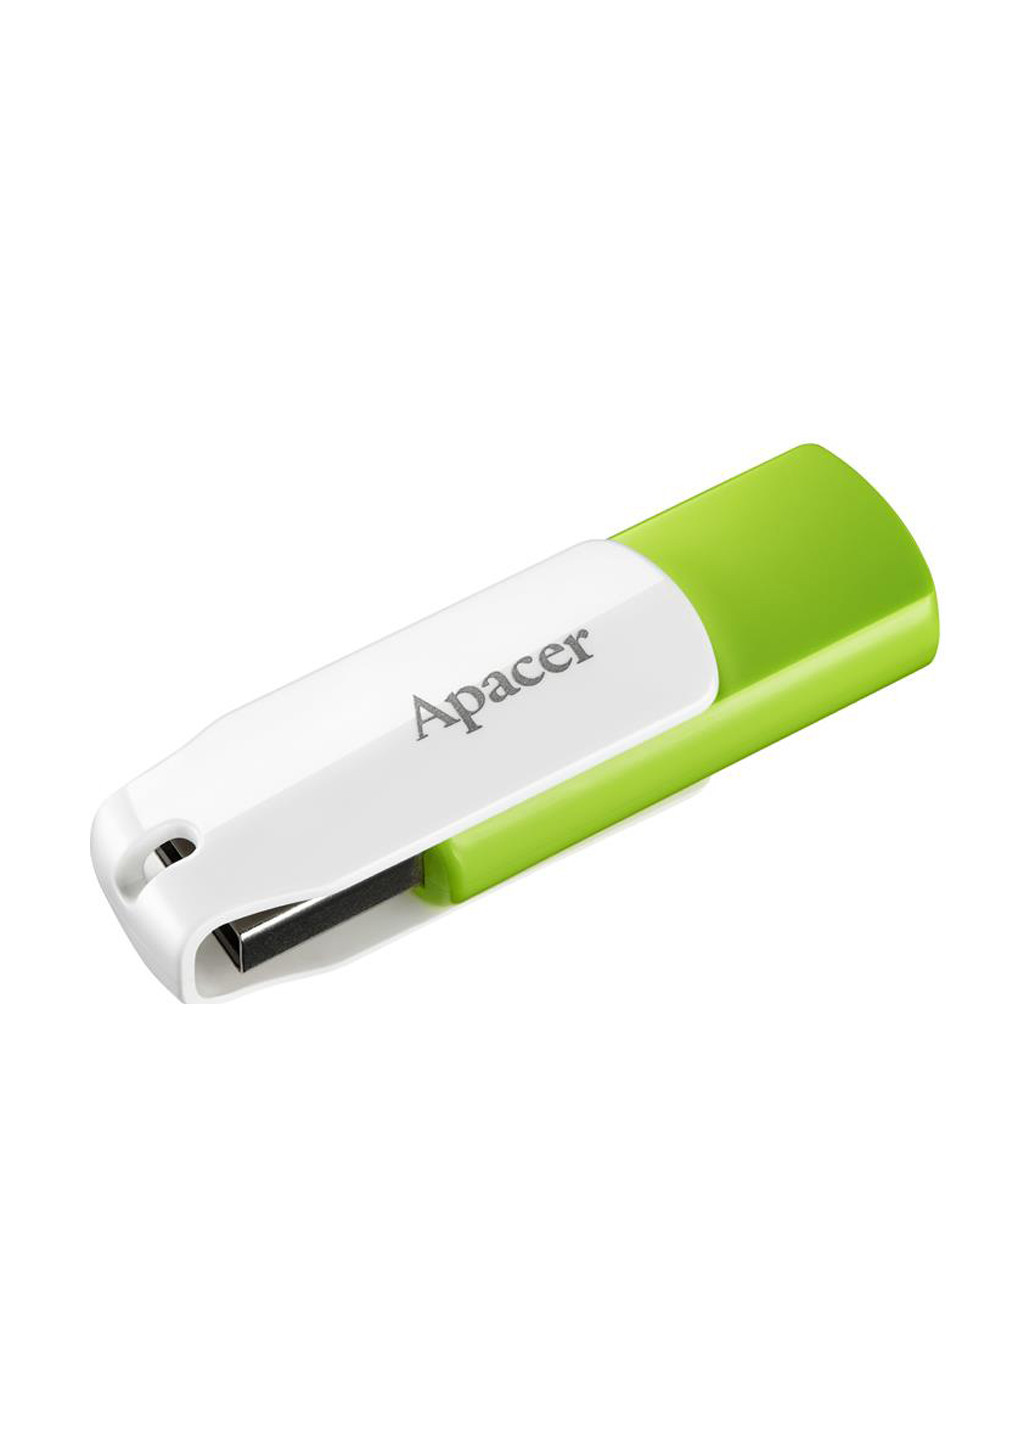 Флеш память USB AH335 32GB USB Green/White (AP32GAH335G-1) Apacer флеш память usb apacer ah335 32gb usb green/white (ap32gah335g-1) (135165469)